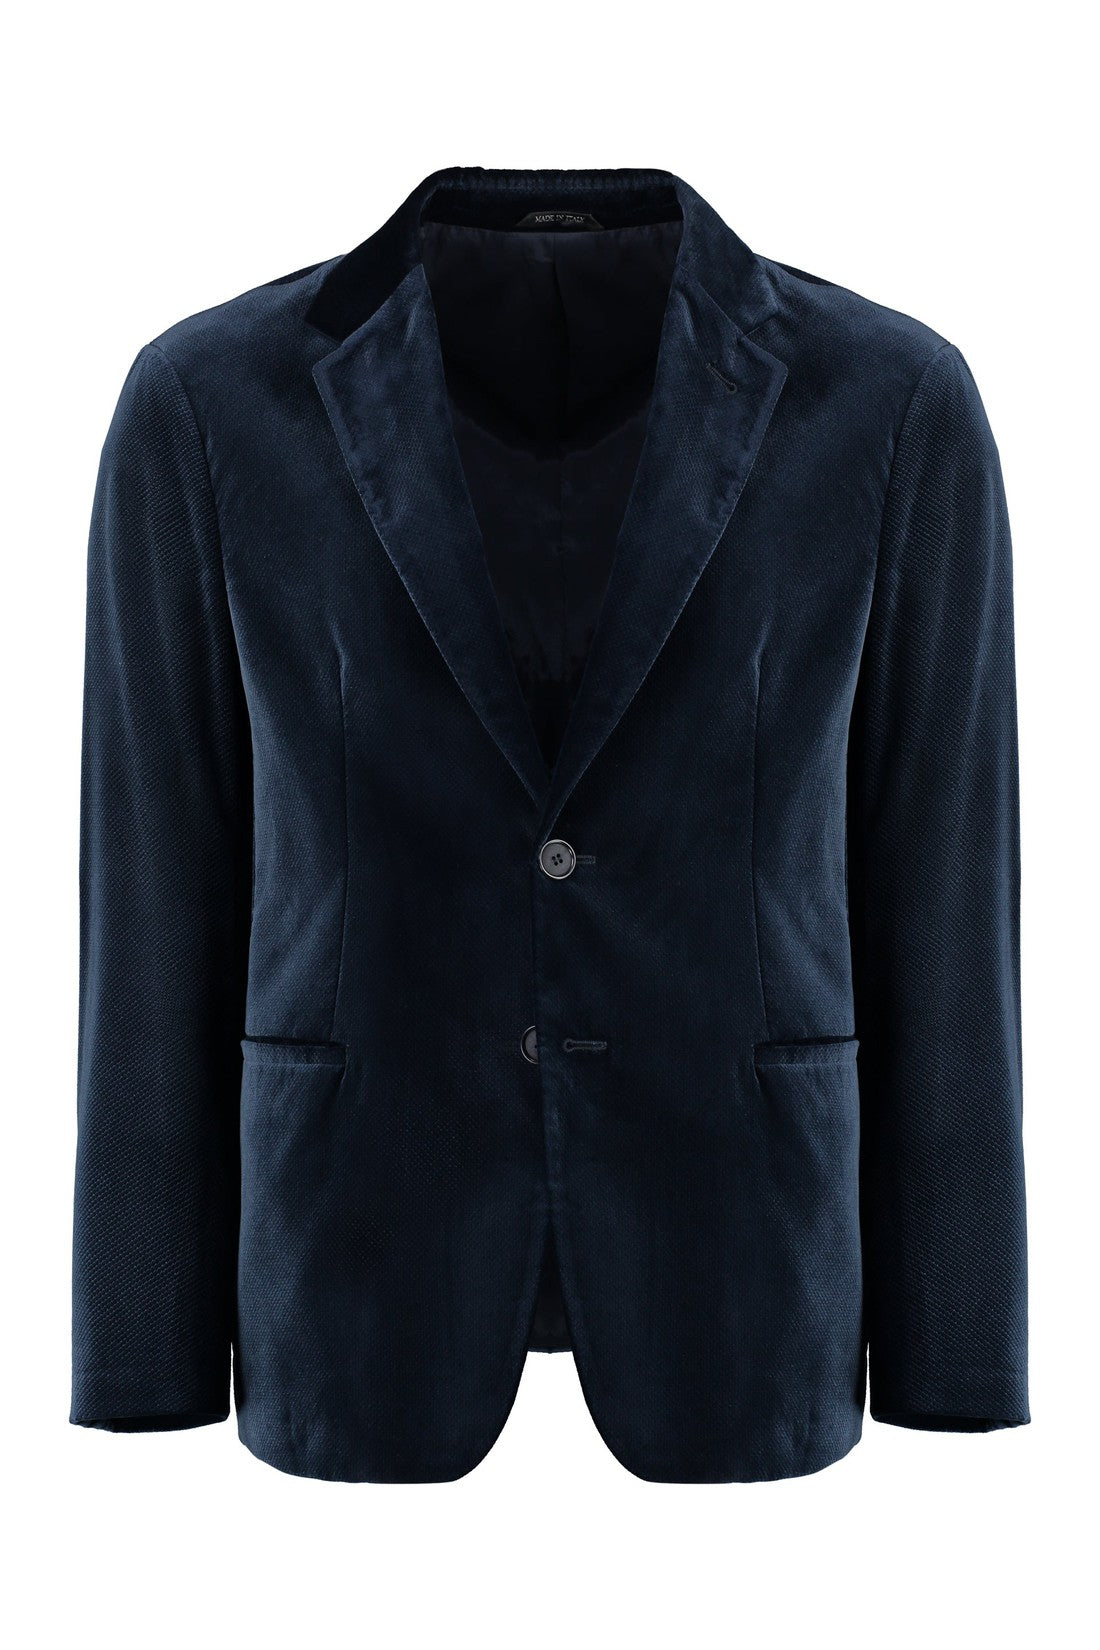 Giorgio Armani-OUTLET-SALE-Single-breasted velvet jacket-ARCHIVIST